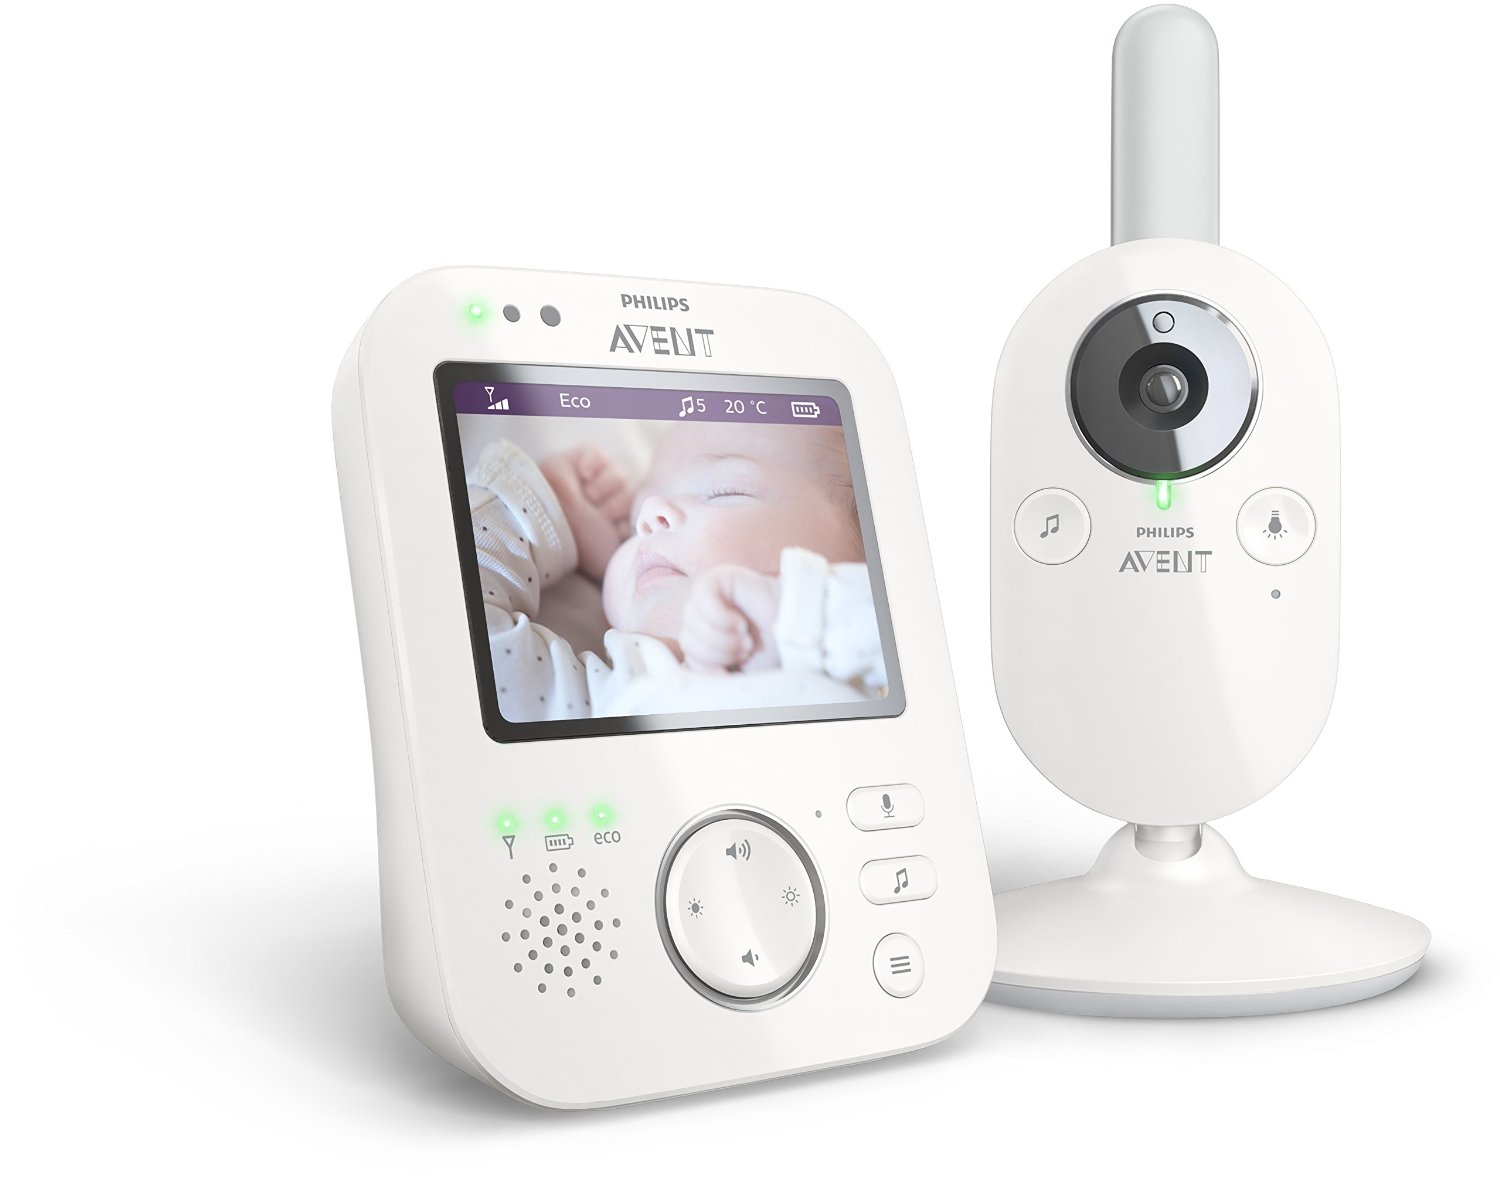 Philips Avent Digital Video baby monitor